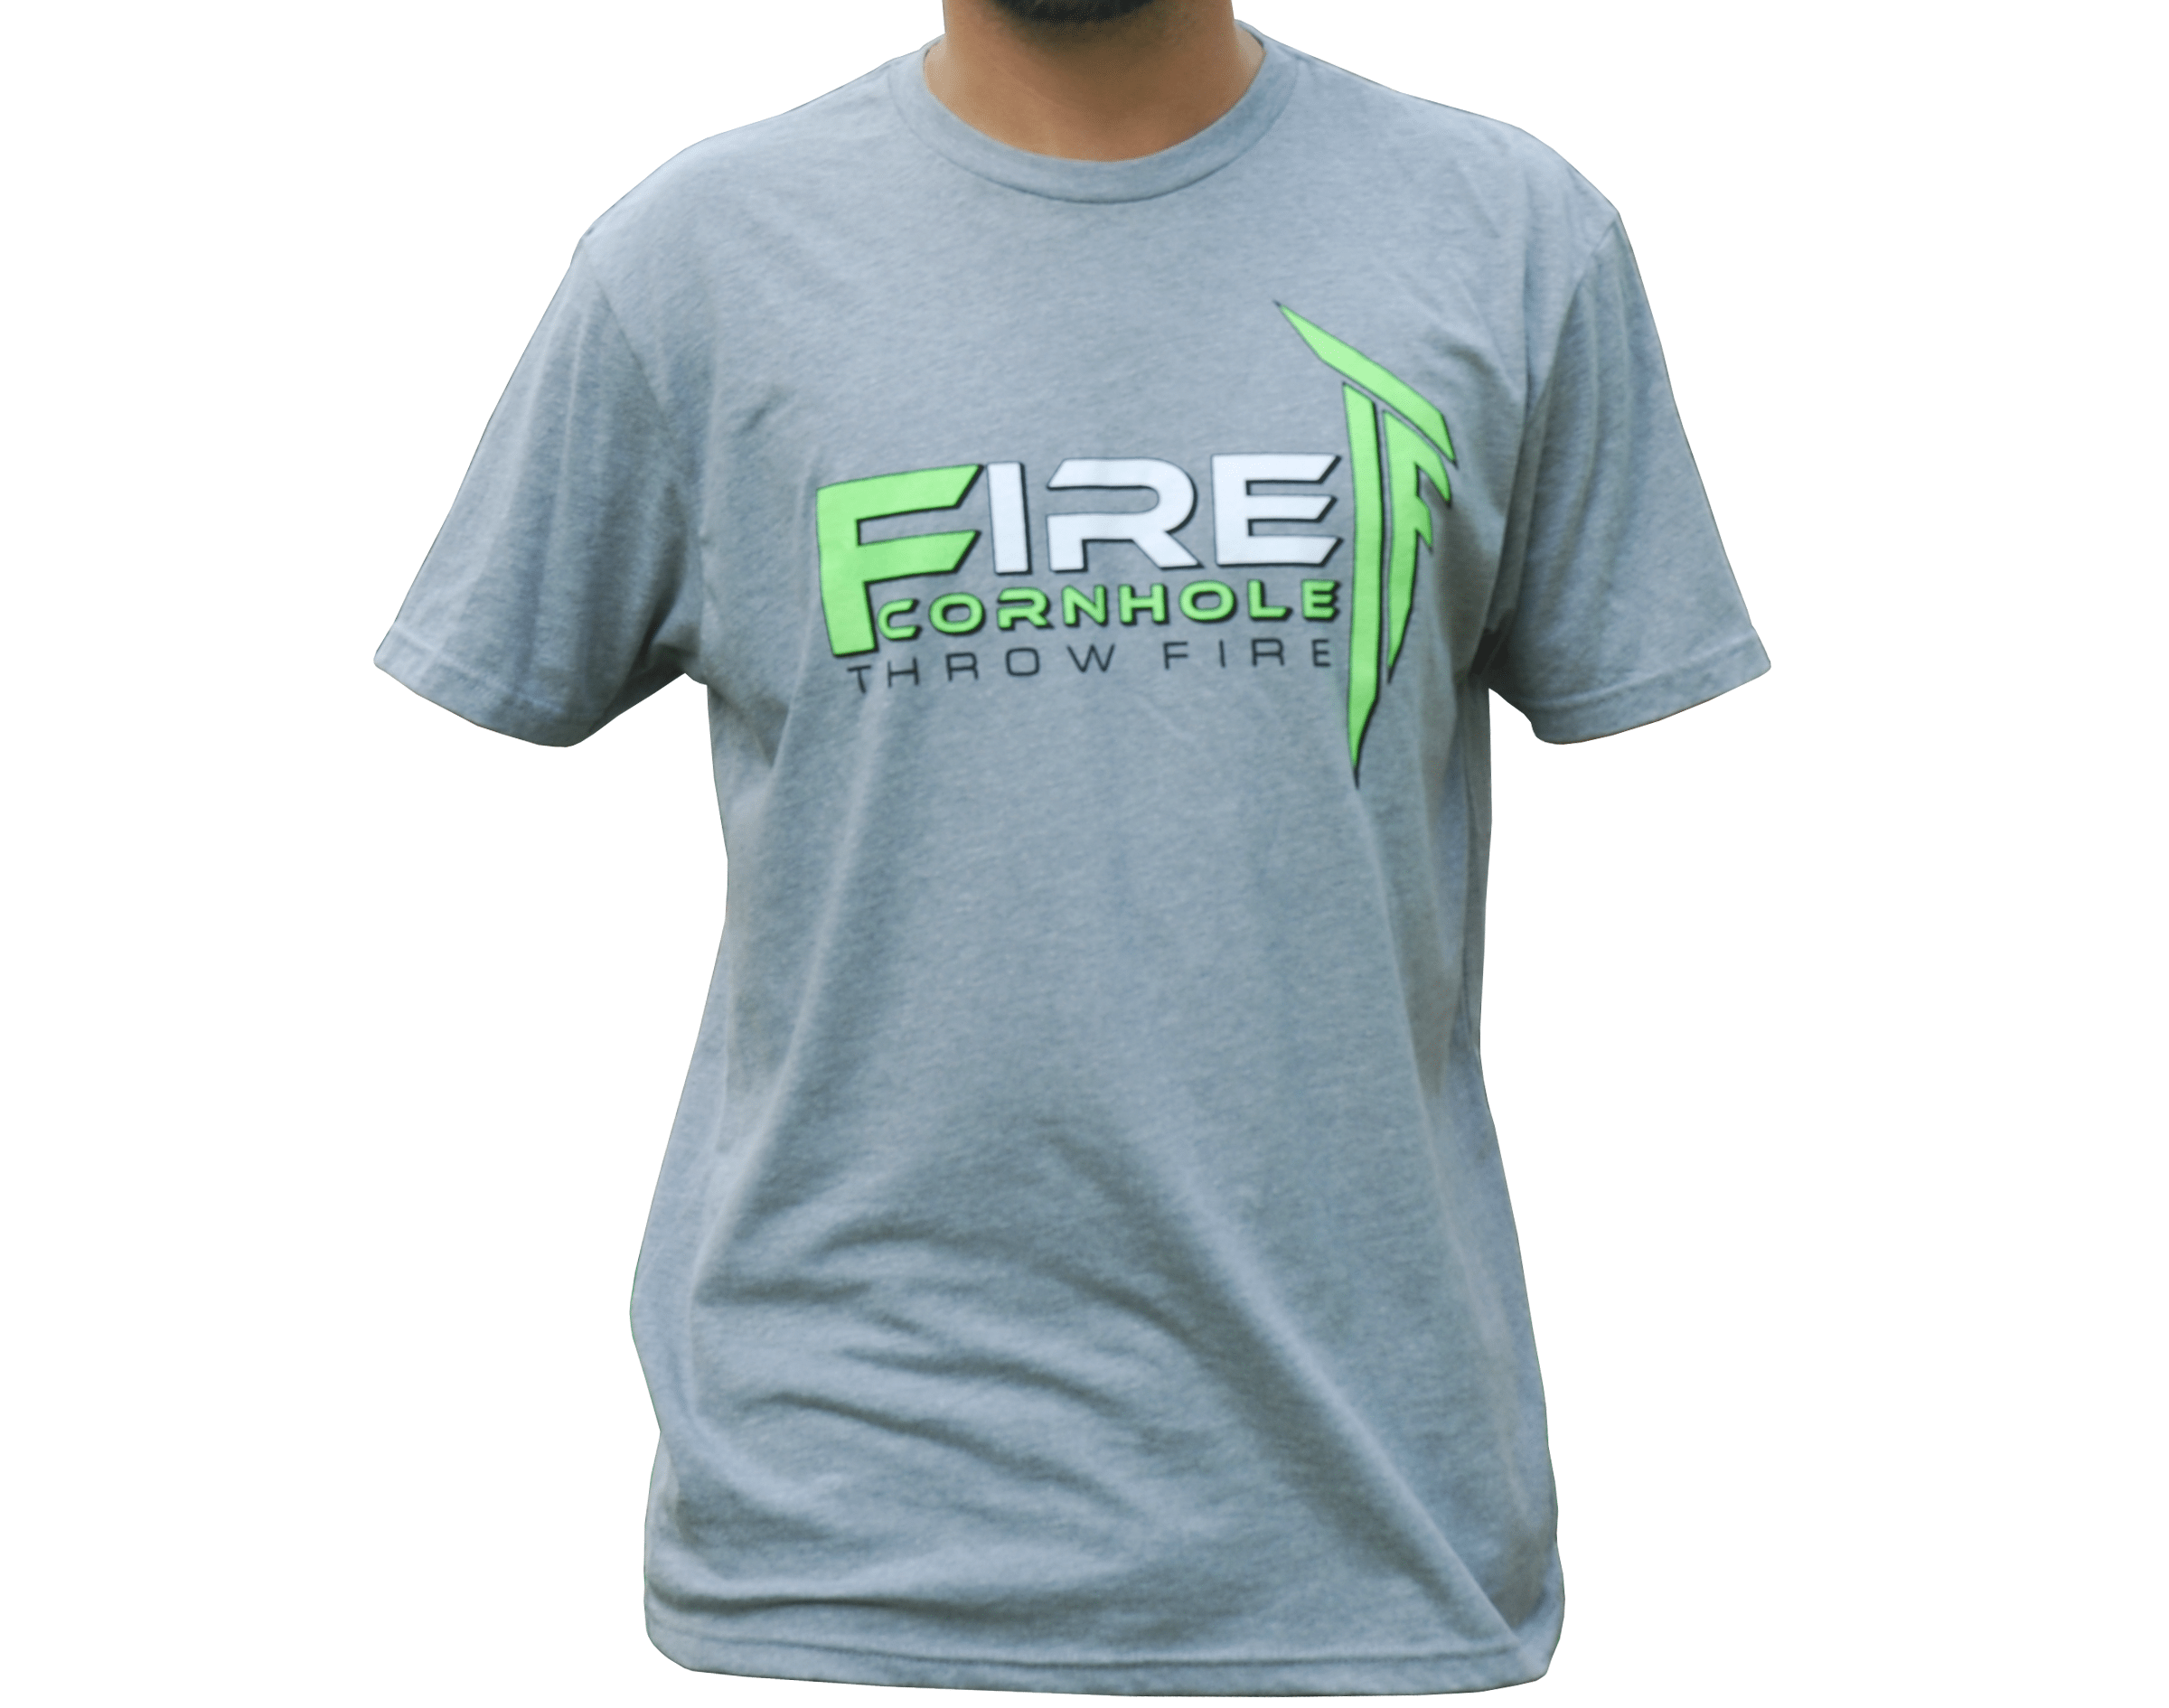 Grey T-shirt with Fire Cornhole logo in green